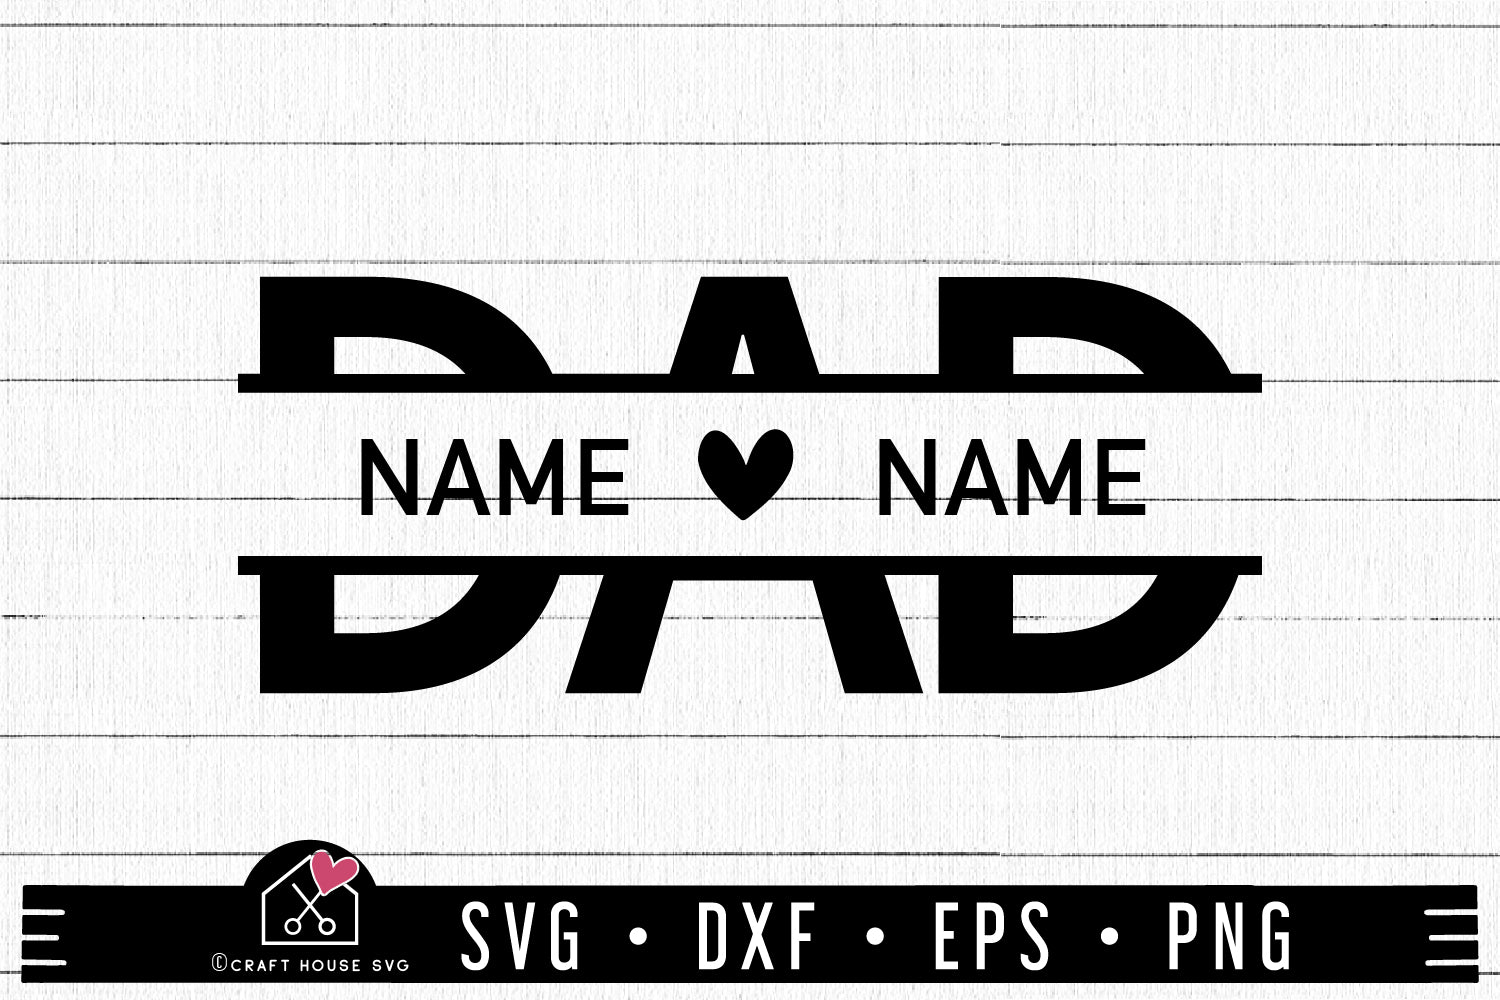 Download Free Father S Day Svg Cut File Dad Split Monogram Svg Cut File Craft House Svg